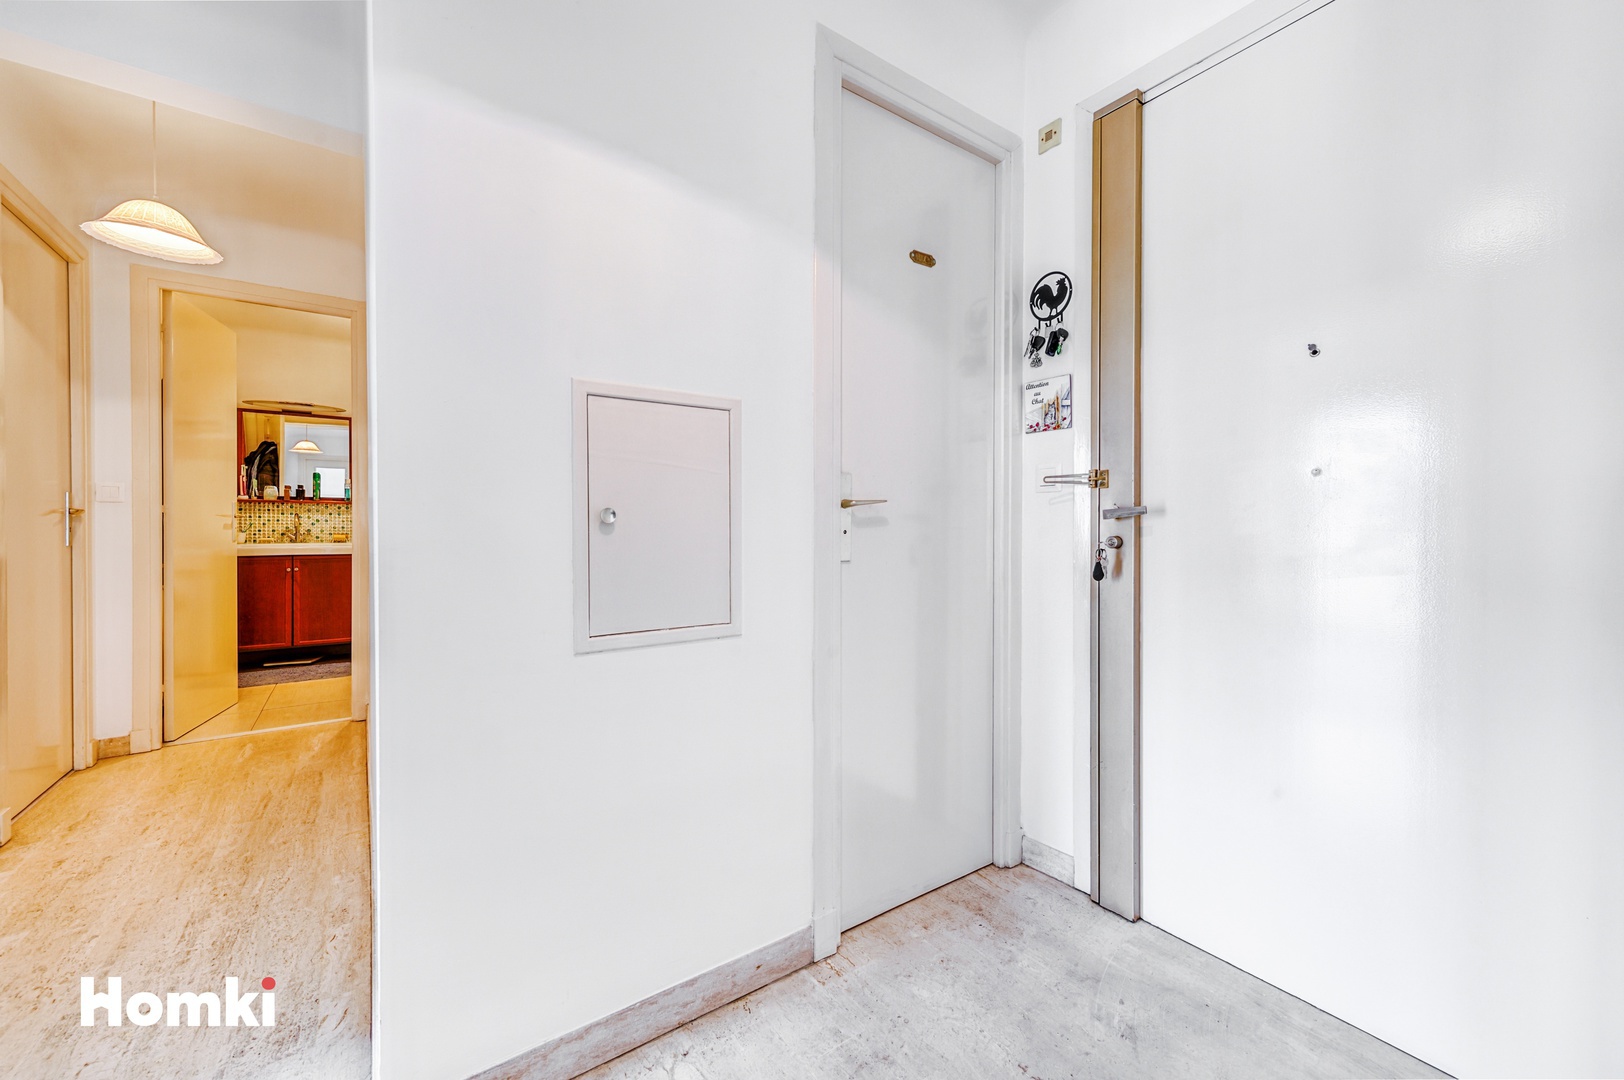 Homki - Vente Appartement  de 50.0 m² à Golf-Juan 06220